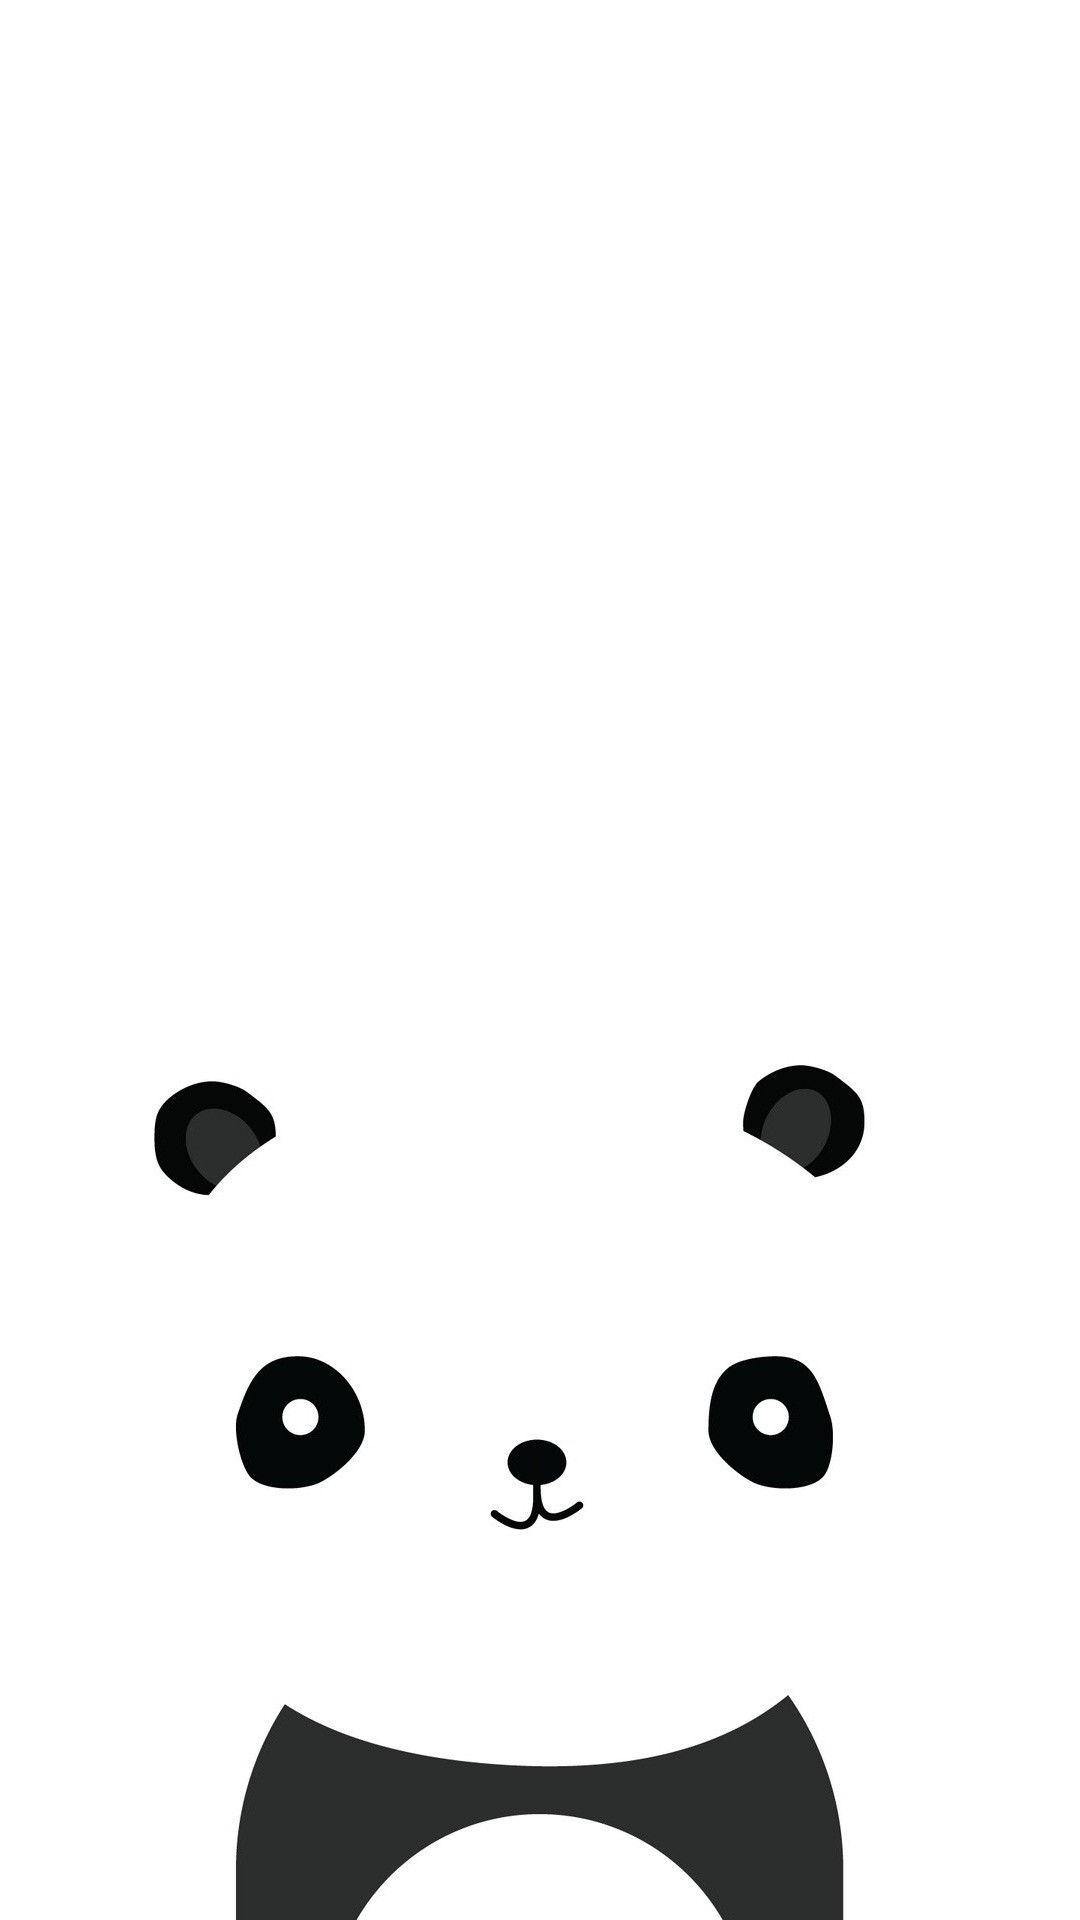 Panda Cute Android Wallpaper High Resolution 1080X1920